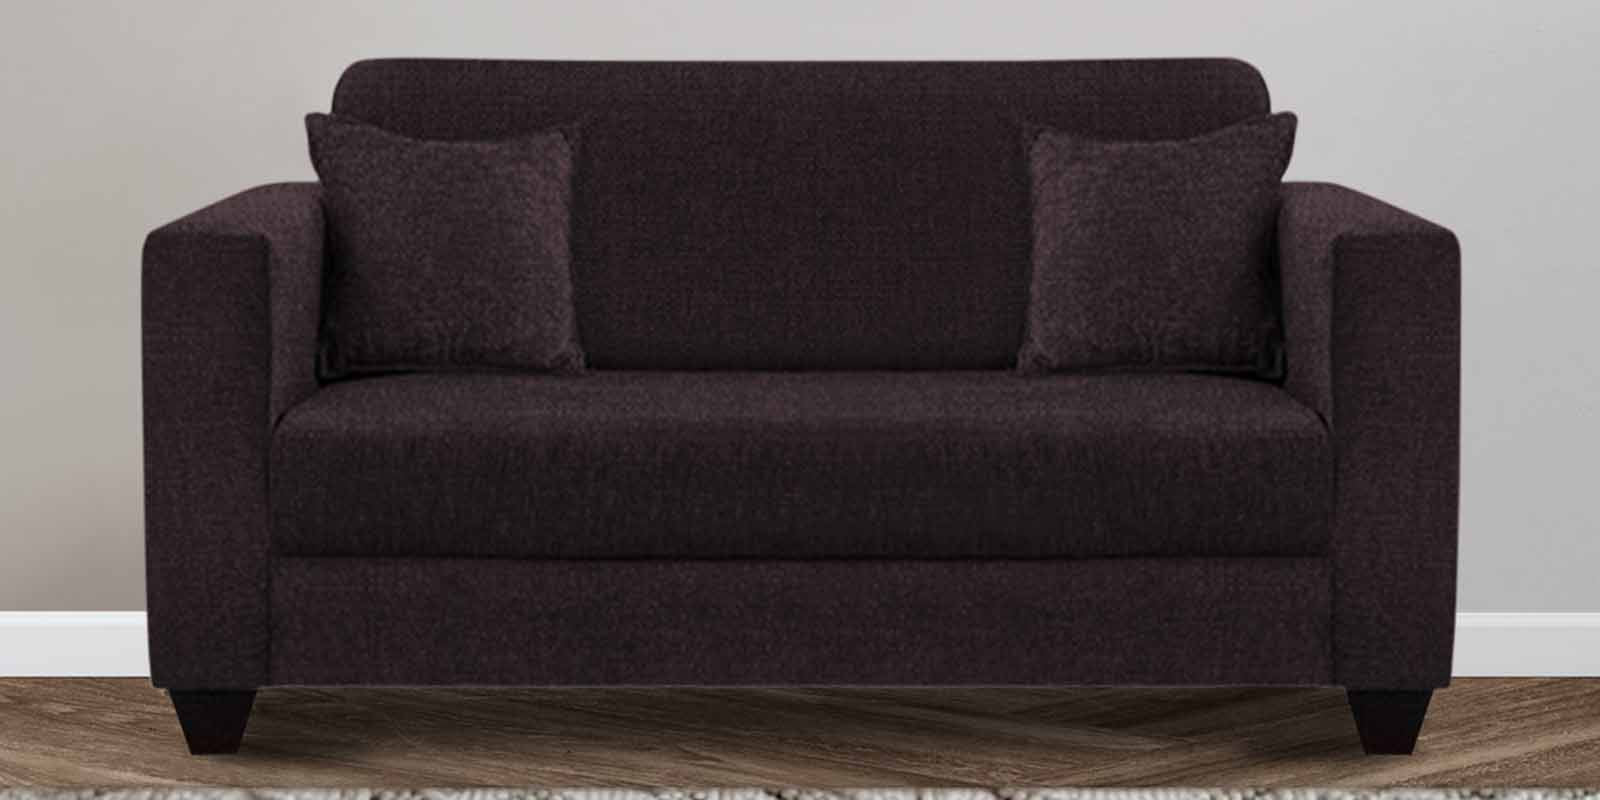 Nebula Fabric 2 Seater Sofa in Cara Brown Colour